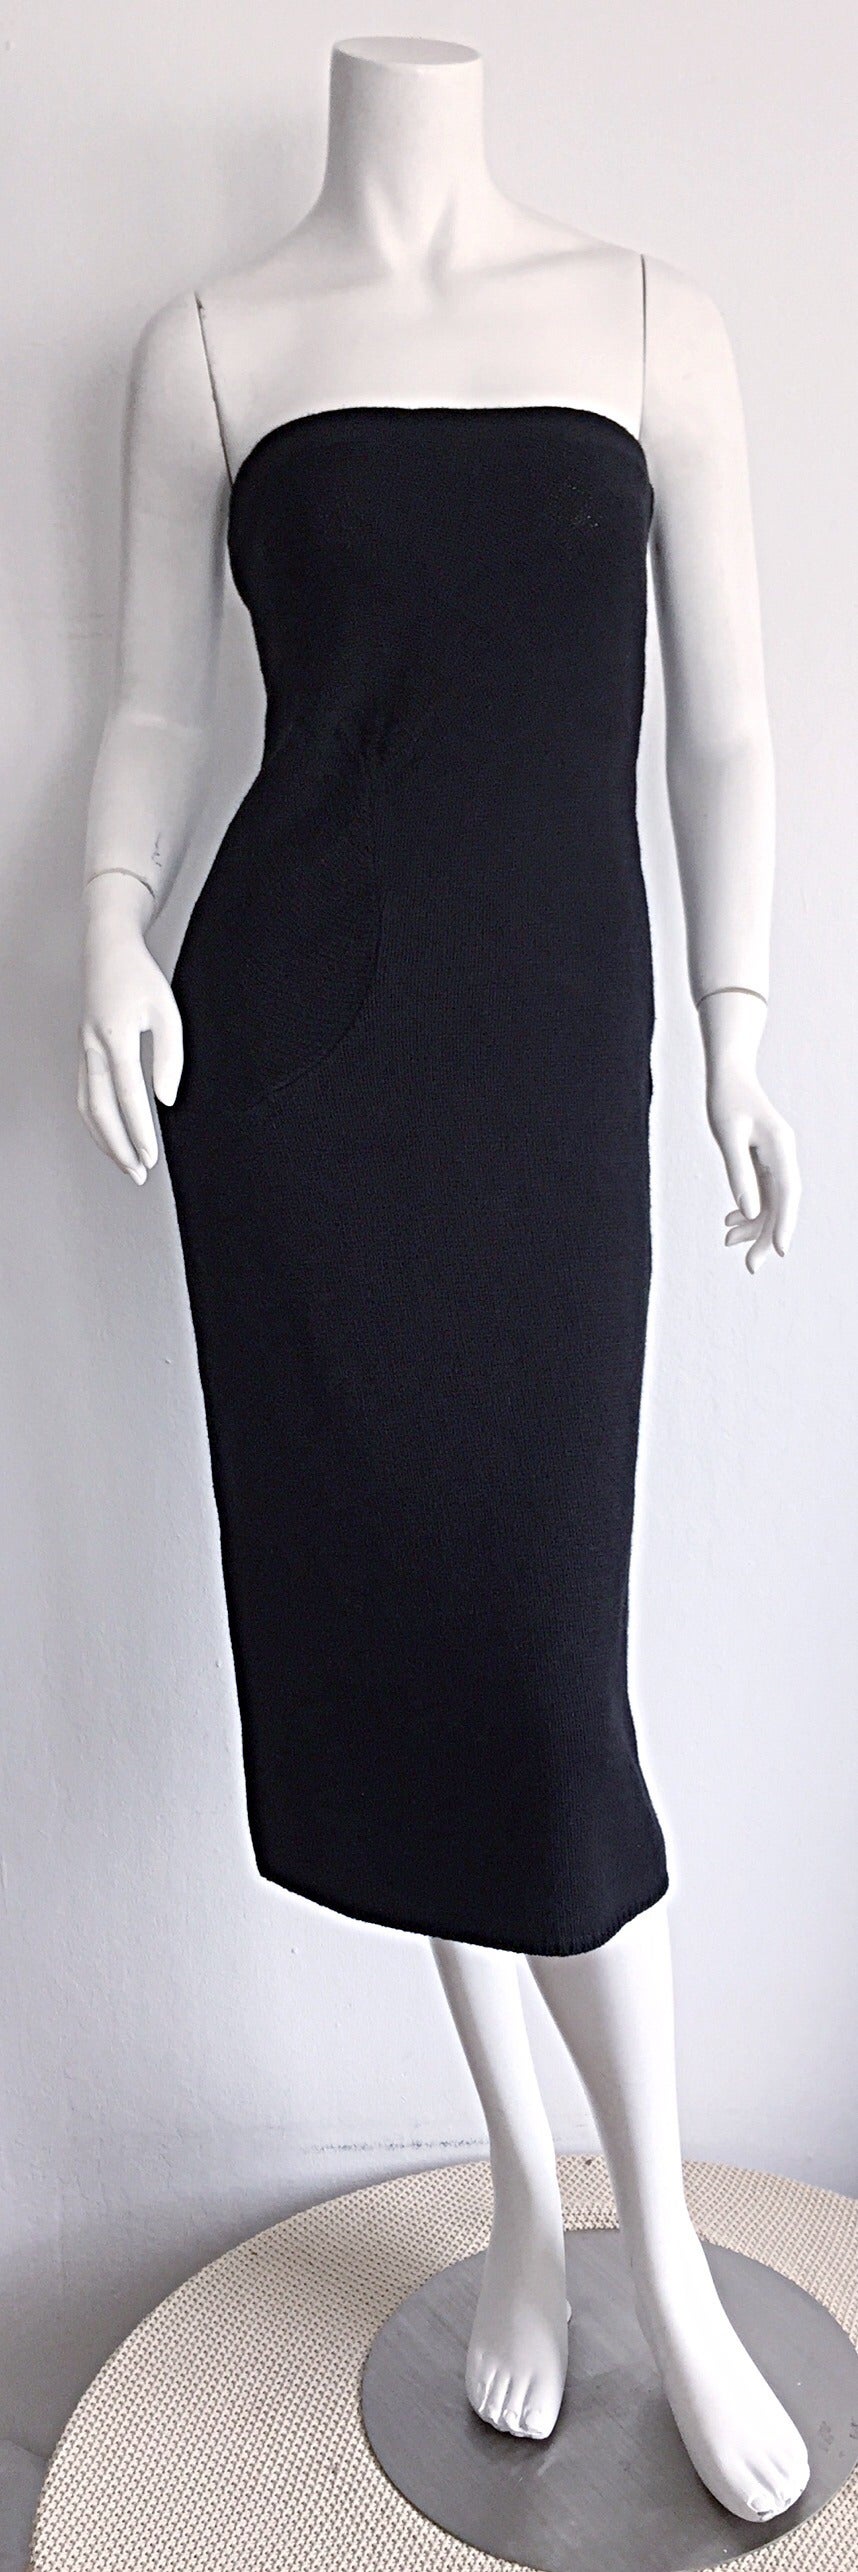 Ultimate Vintage Calvin Klein Collection 1990s Black Knit Strapless Dress LBD For Sale 2